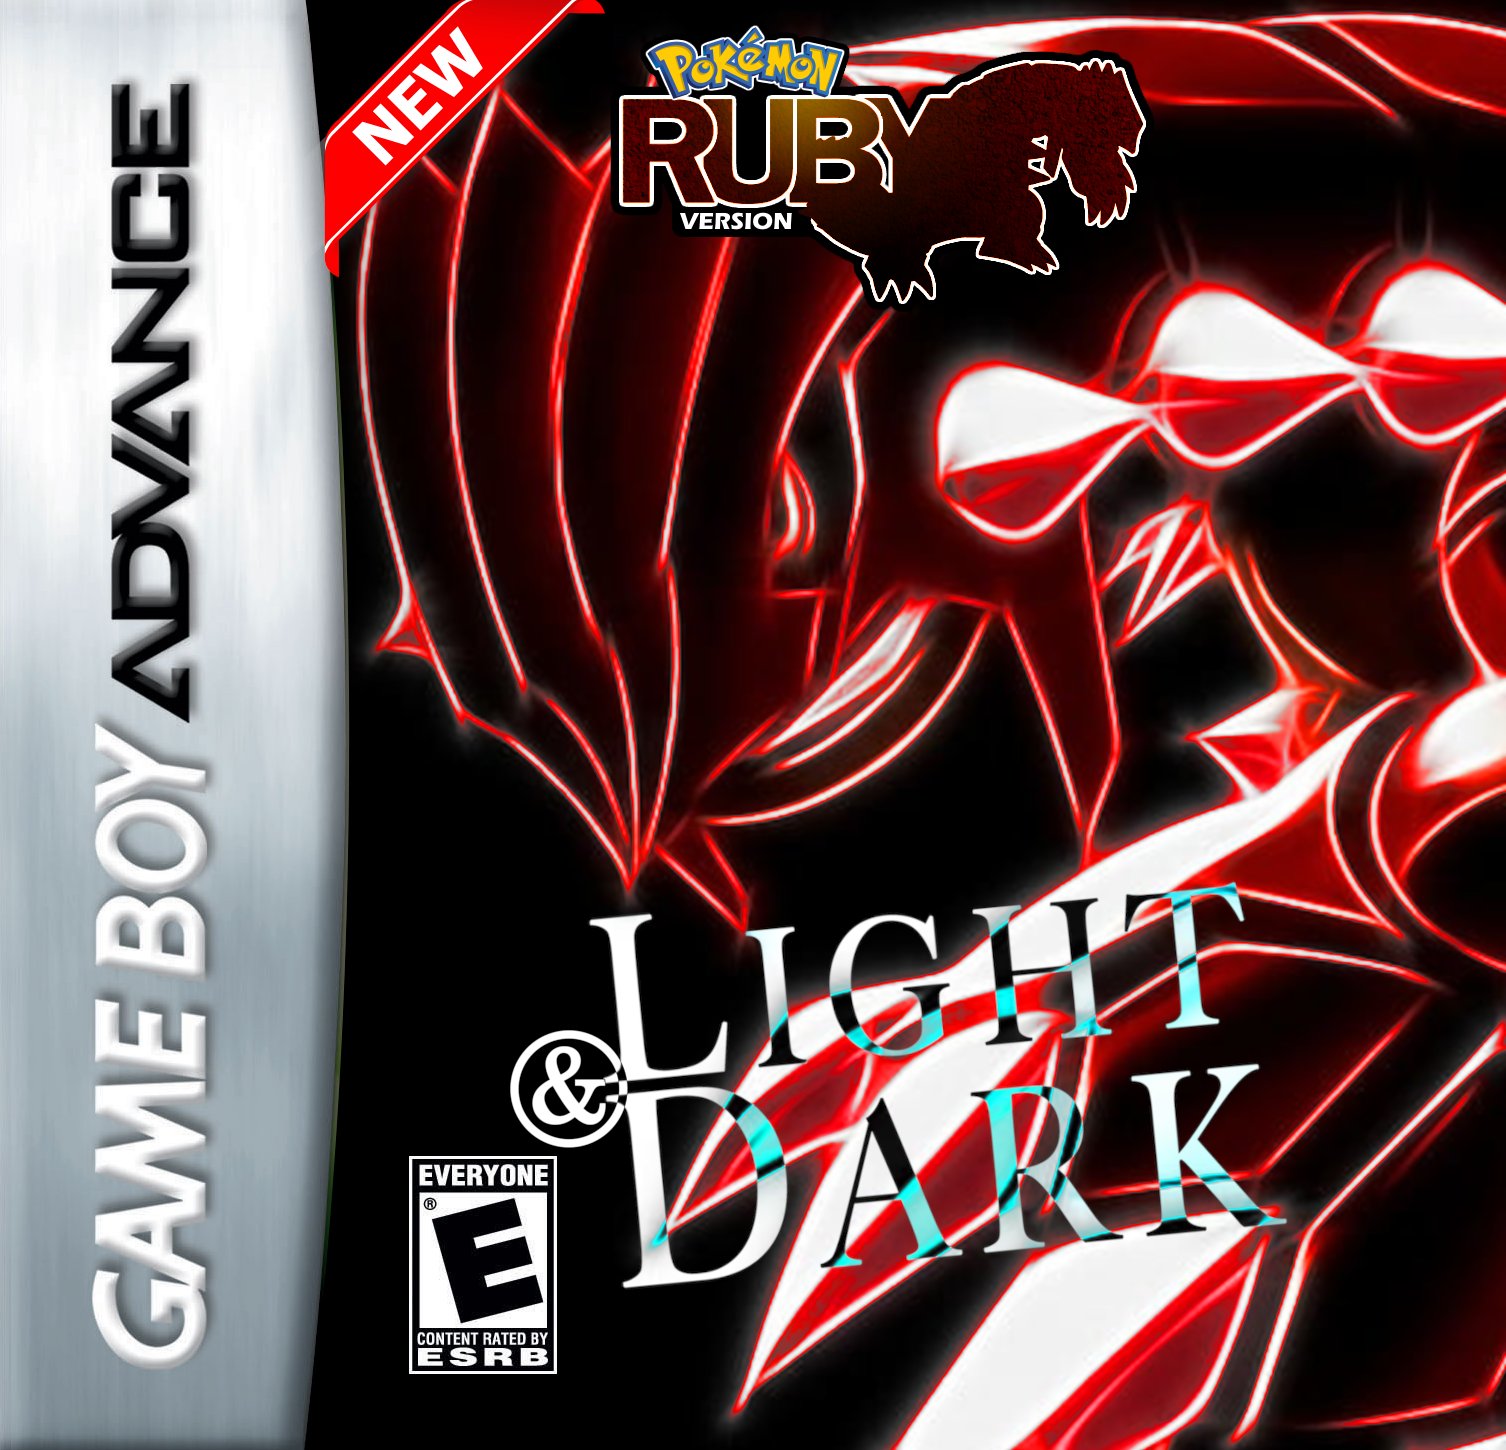 Pokémon Version NEW Rubis - Light & Dark